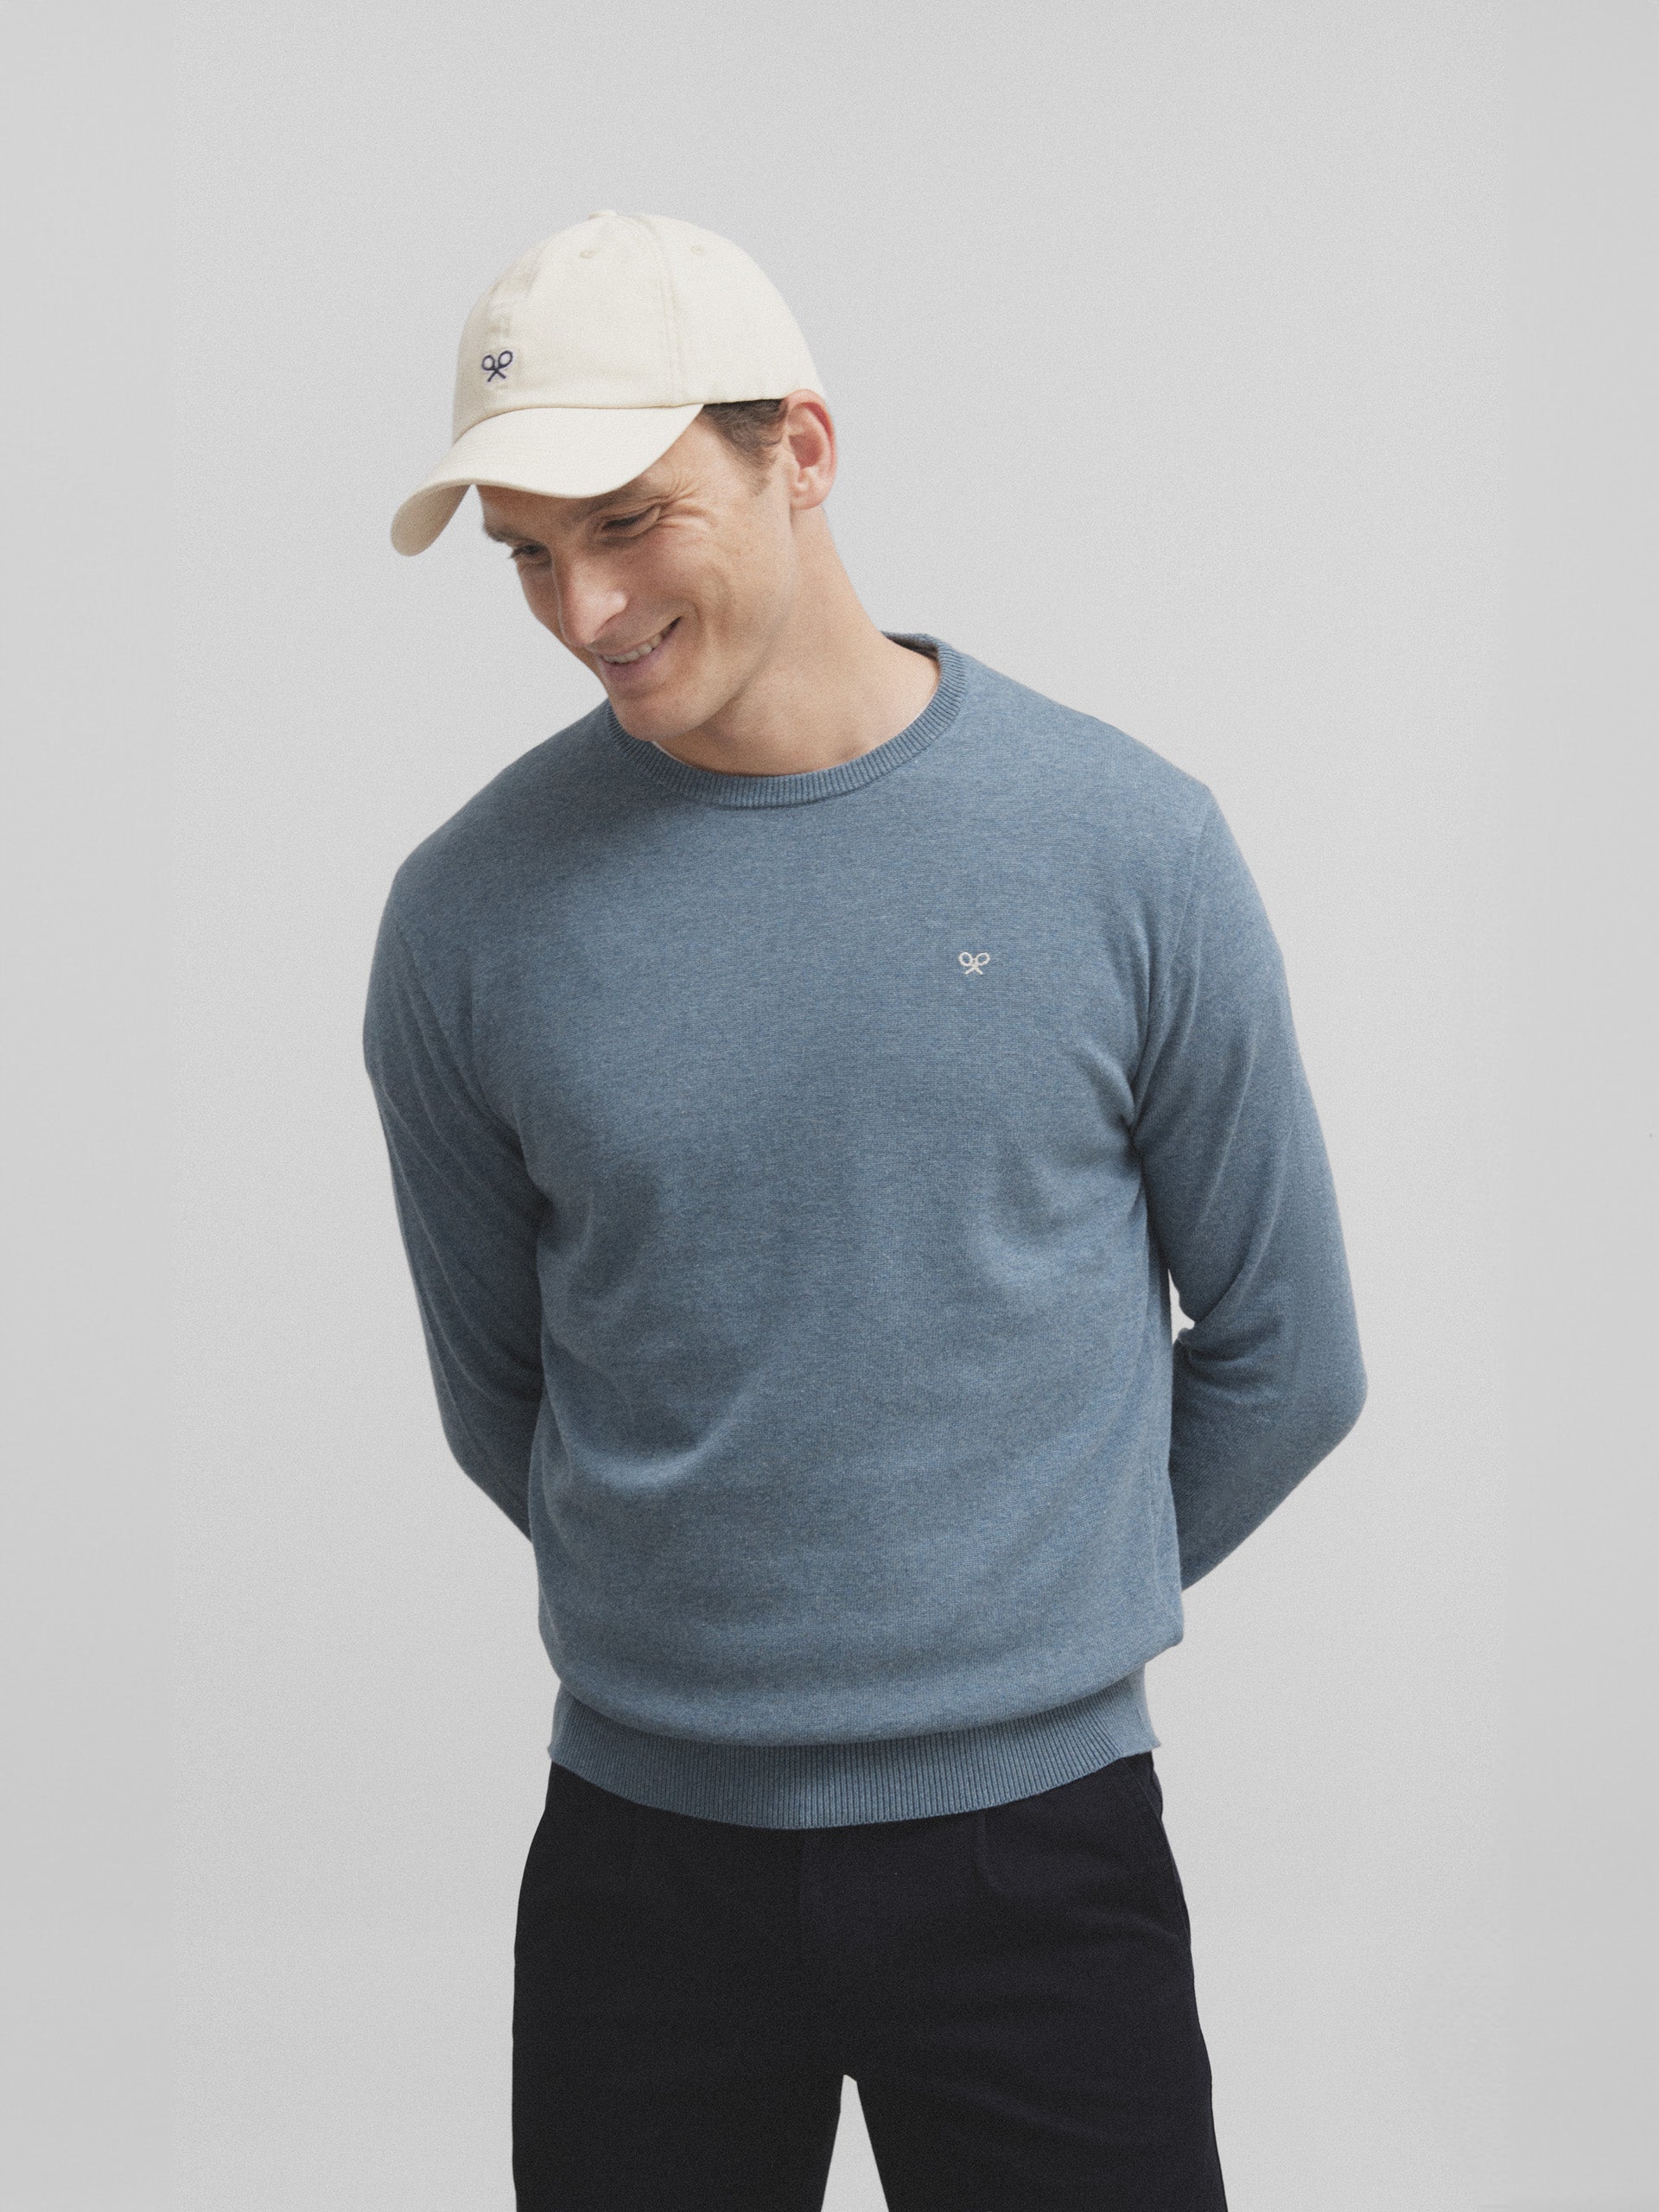 Gray blue round neck sweater